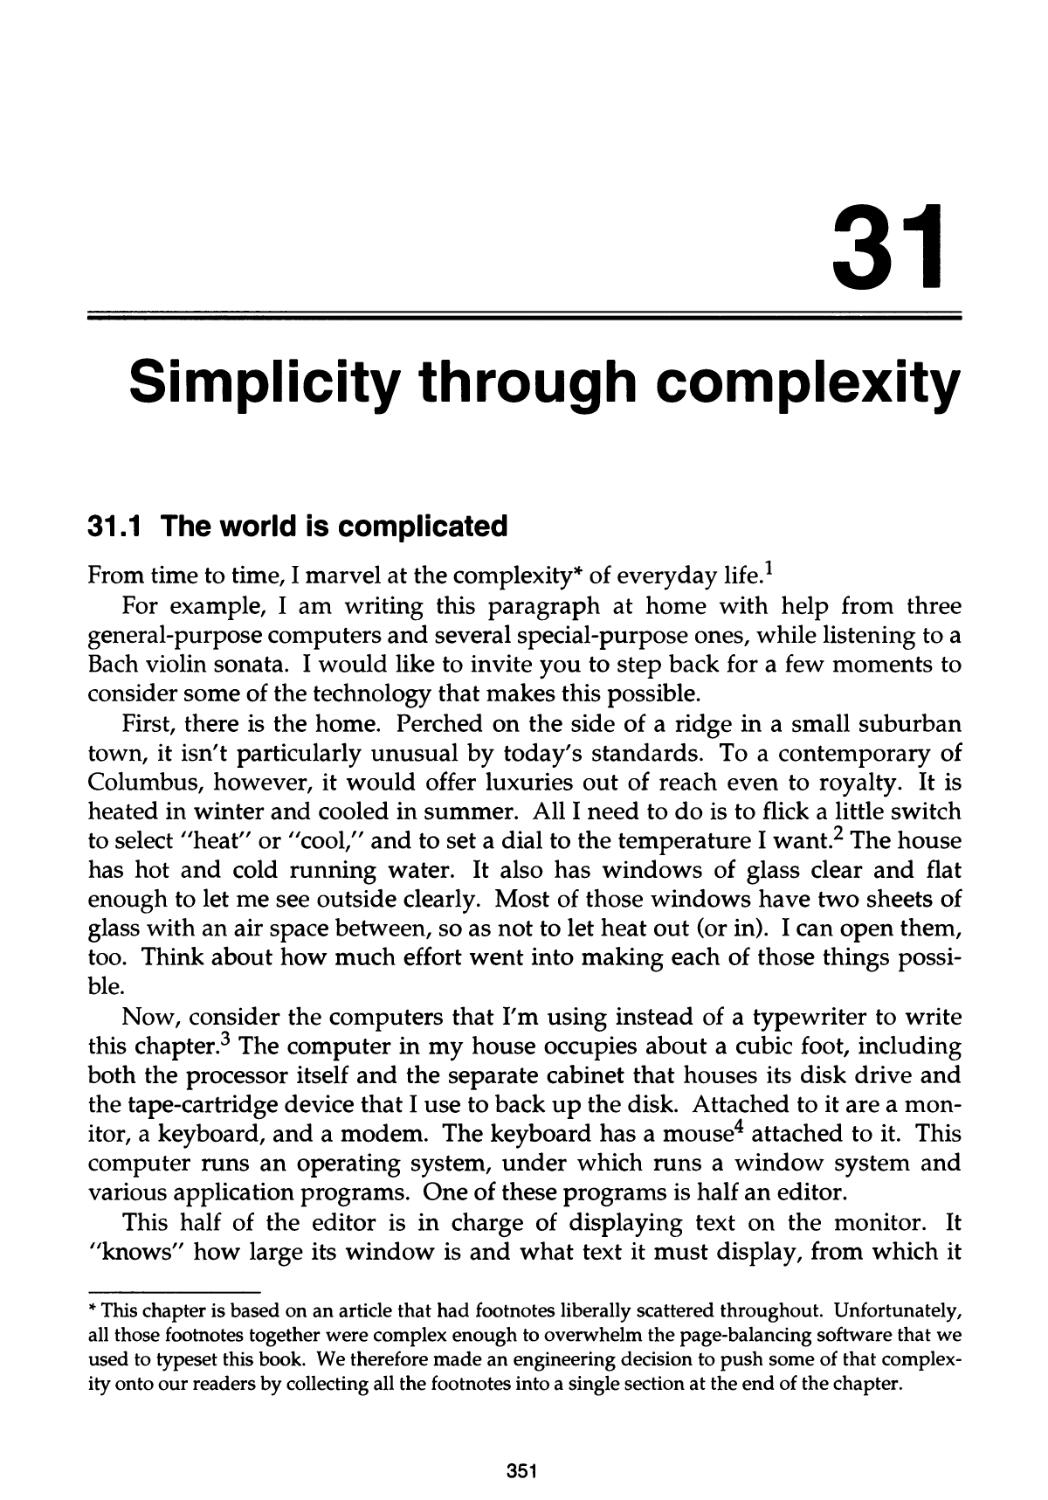 31.2 Complexity becomes hidden